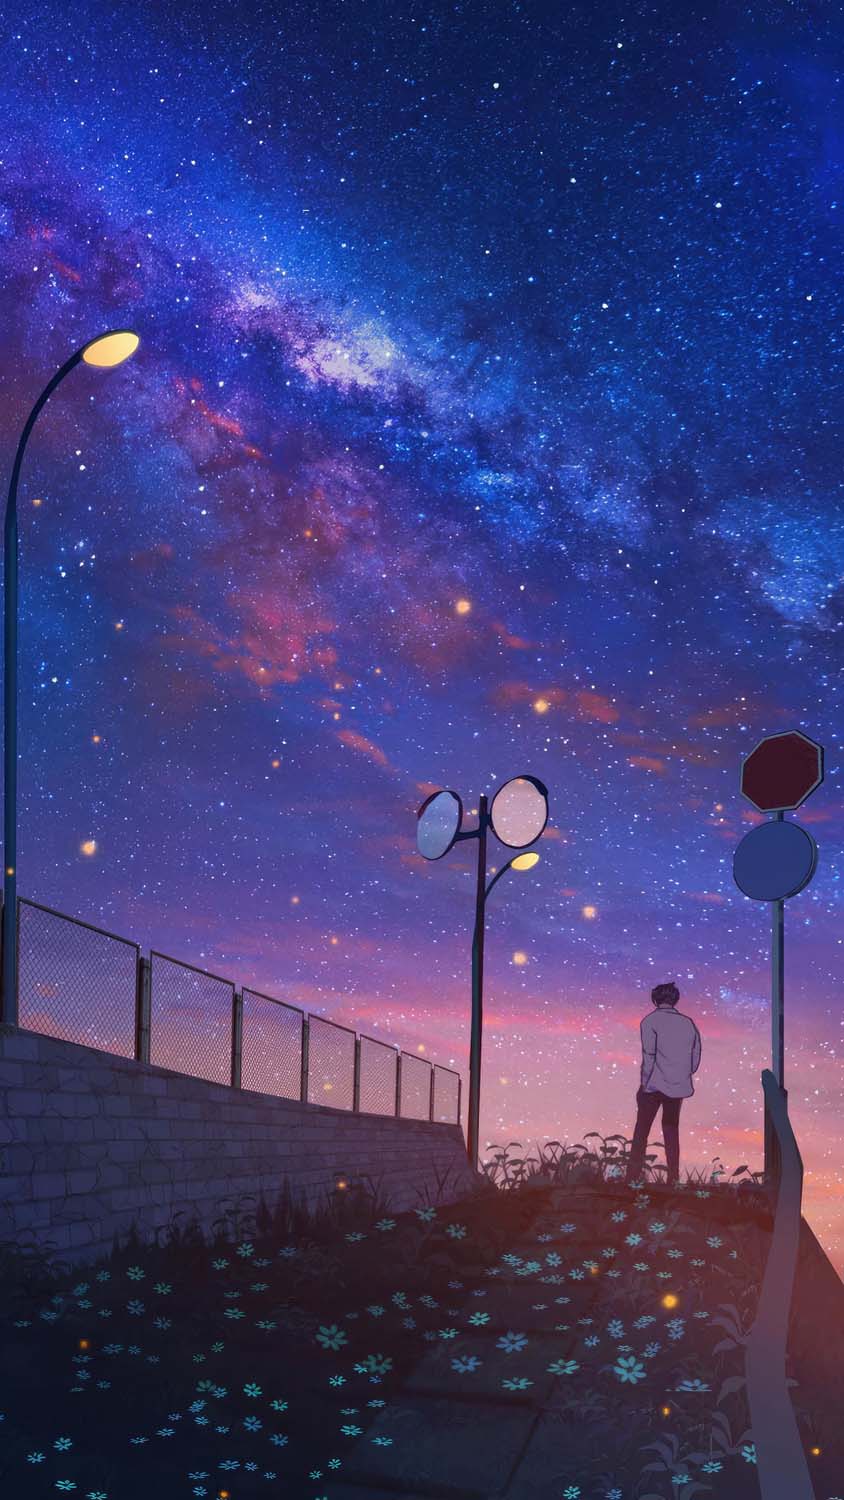 Solitude path an anime boy solo journey iPhone Wallpaper 4K